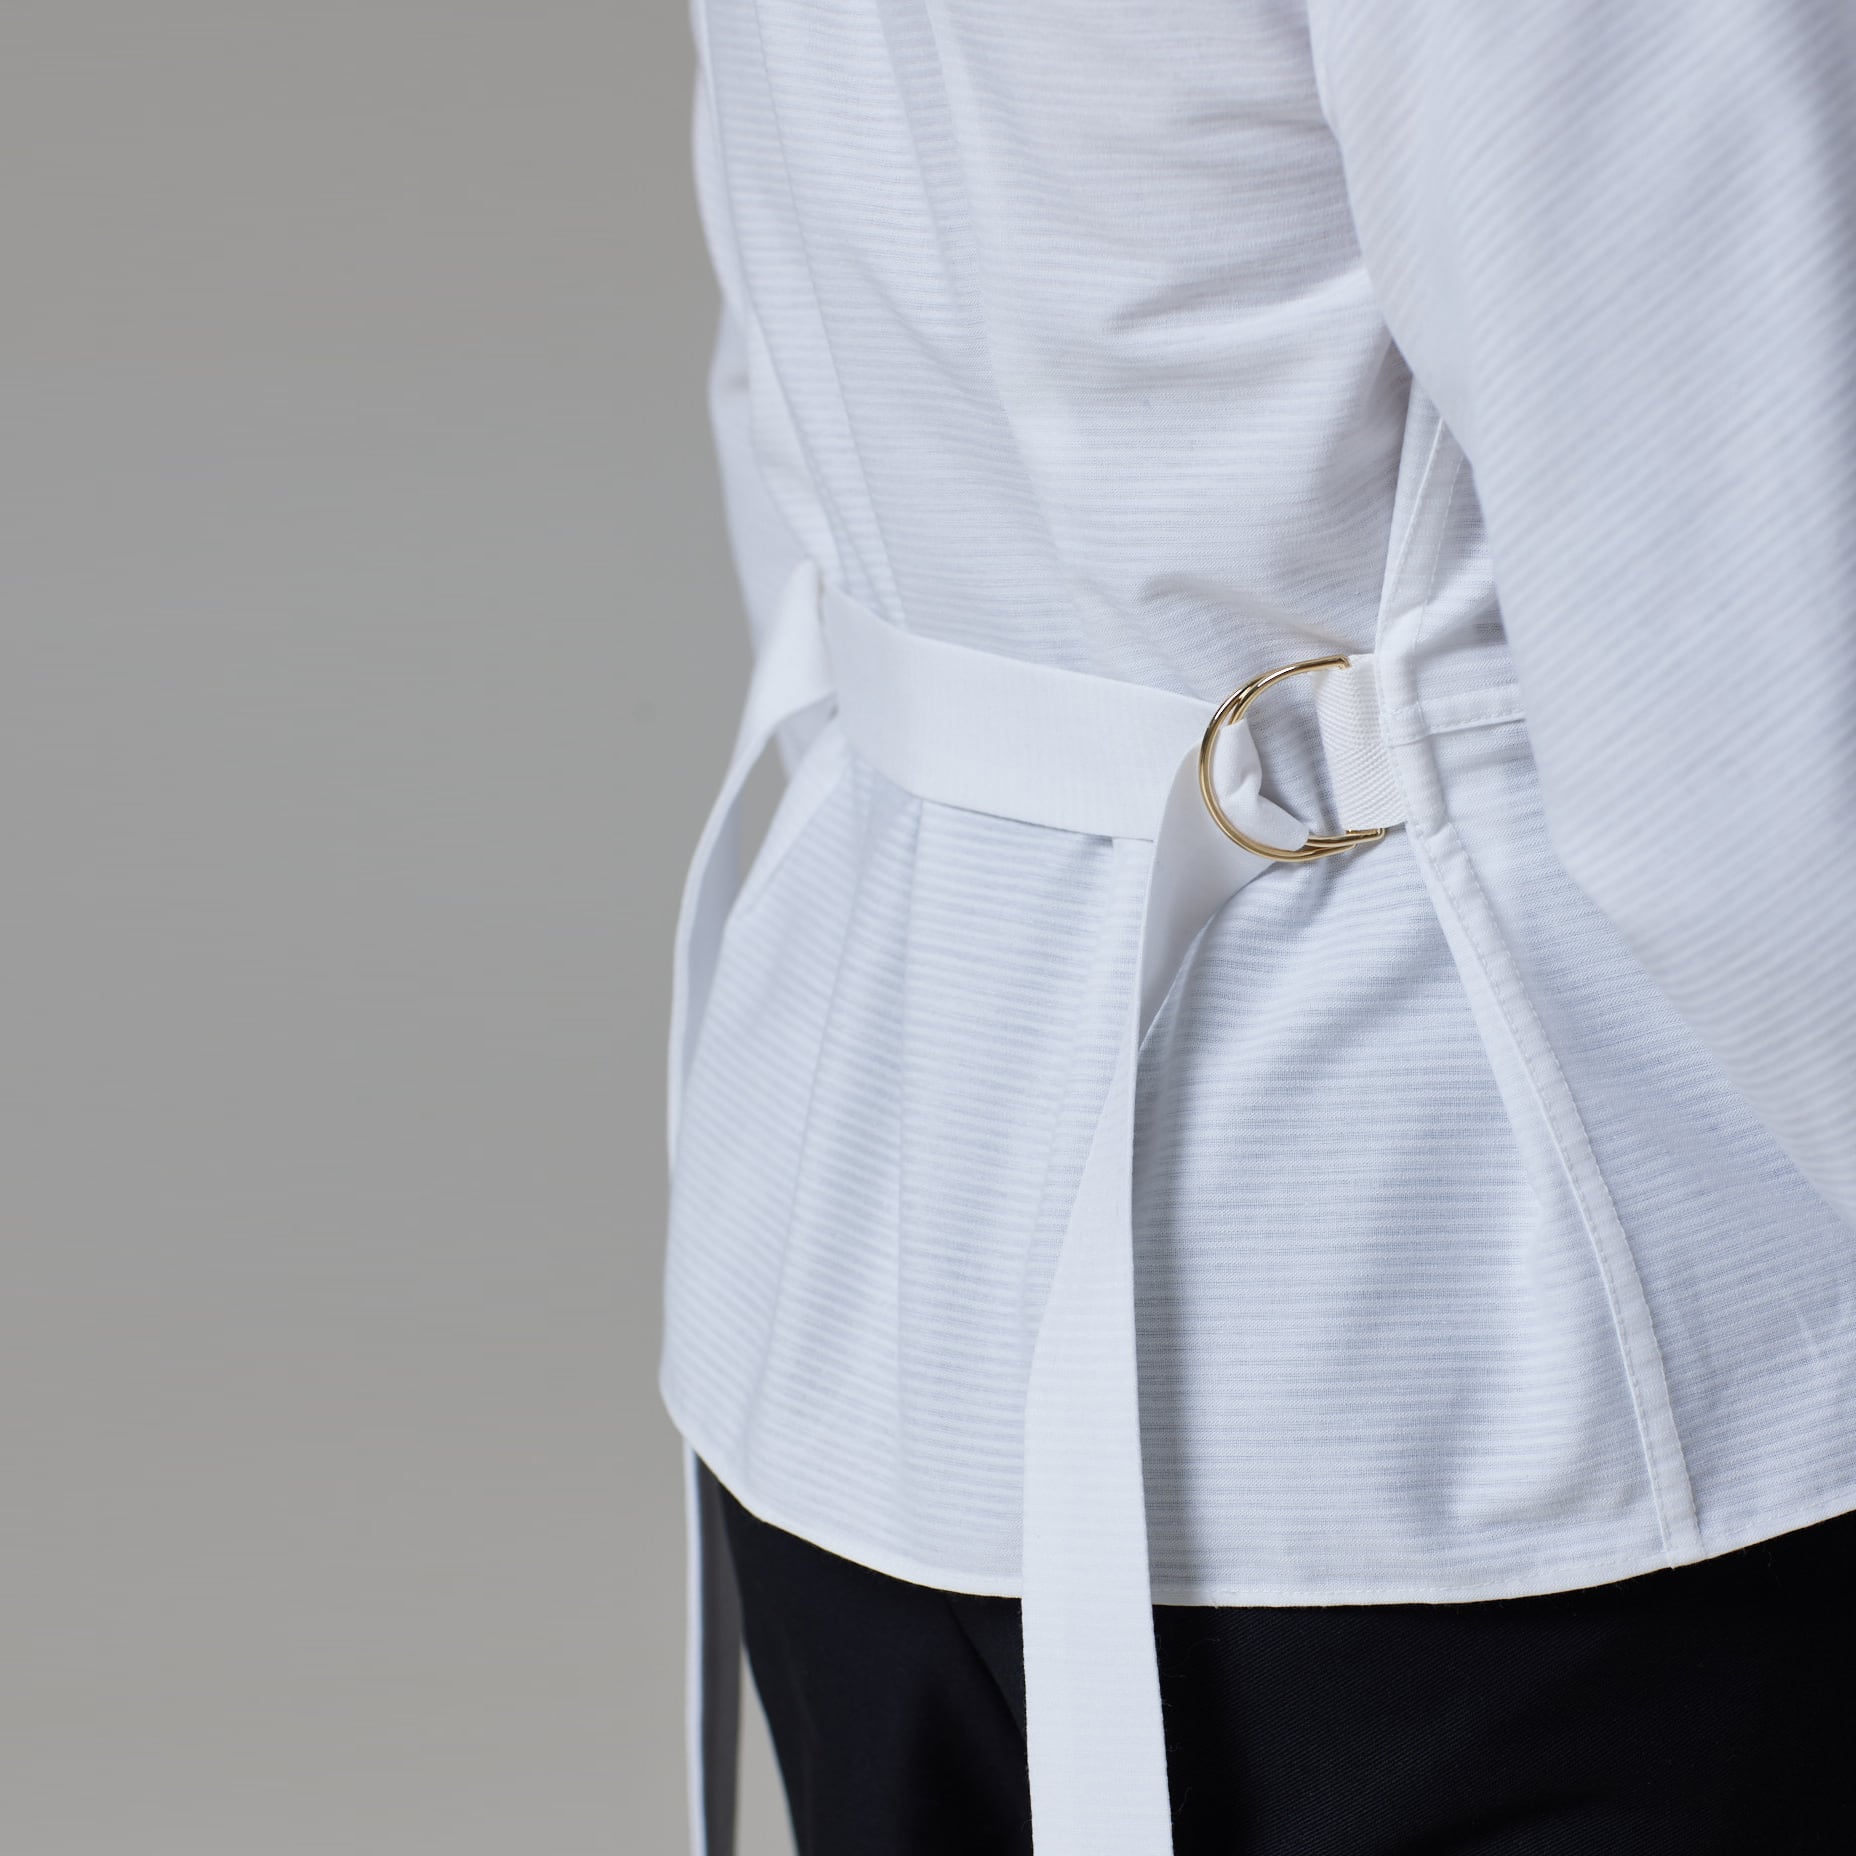 ZERØ London - Zoom view, mens luxury white dress shirt, zero waste fashion, designed & made in London